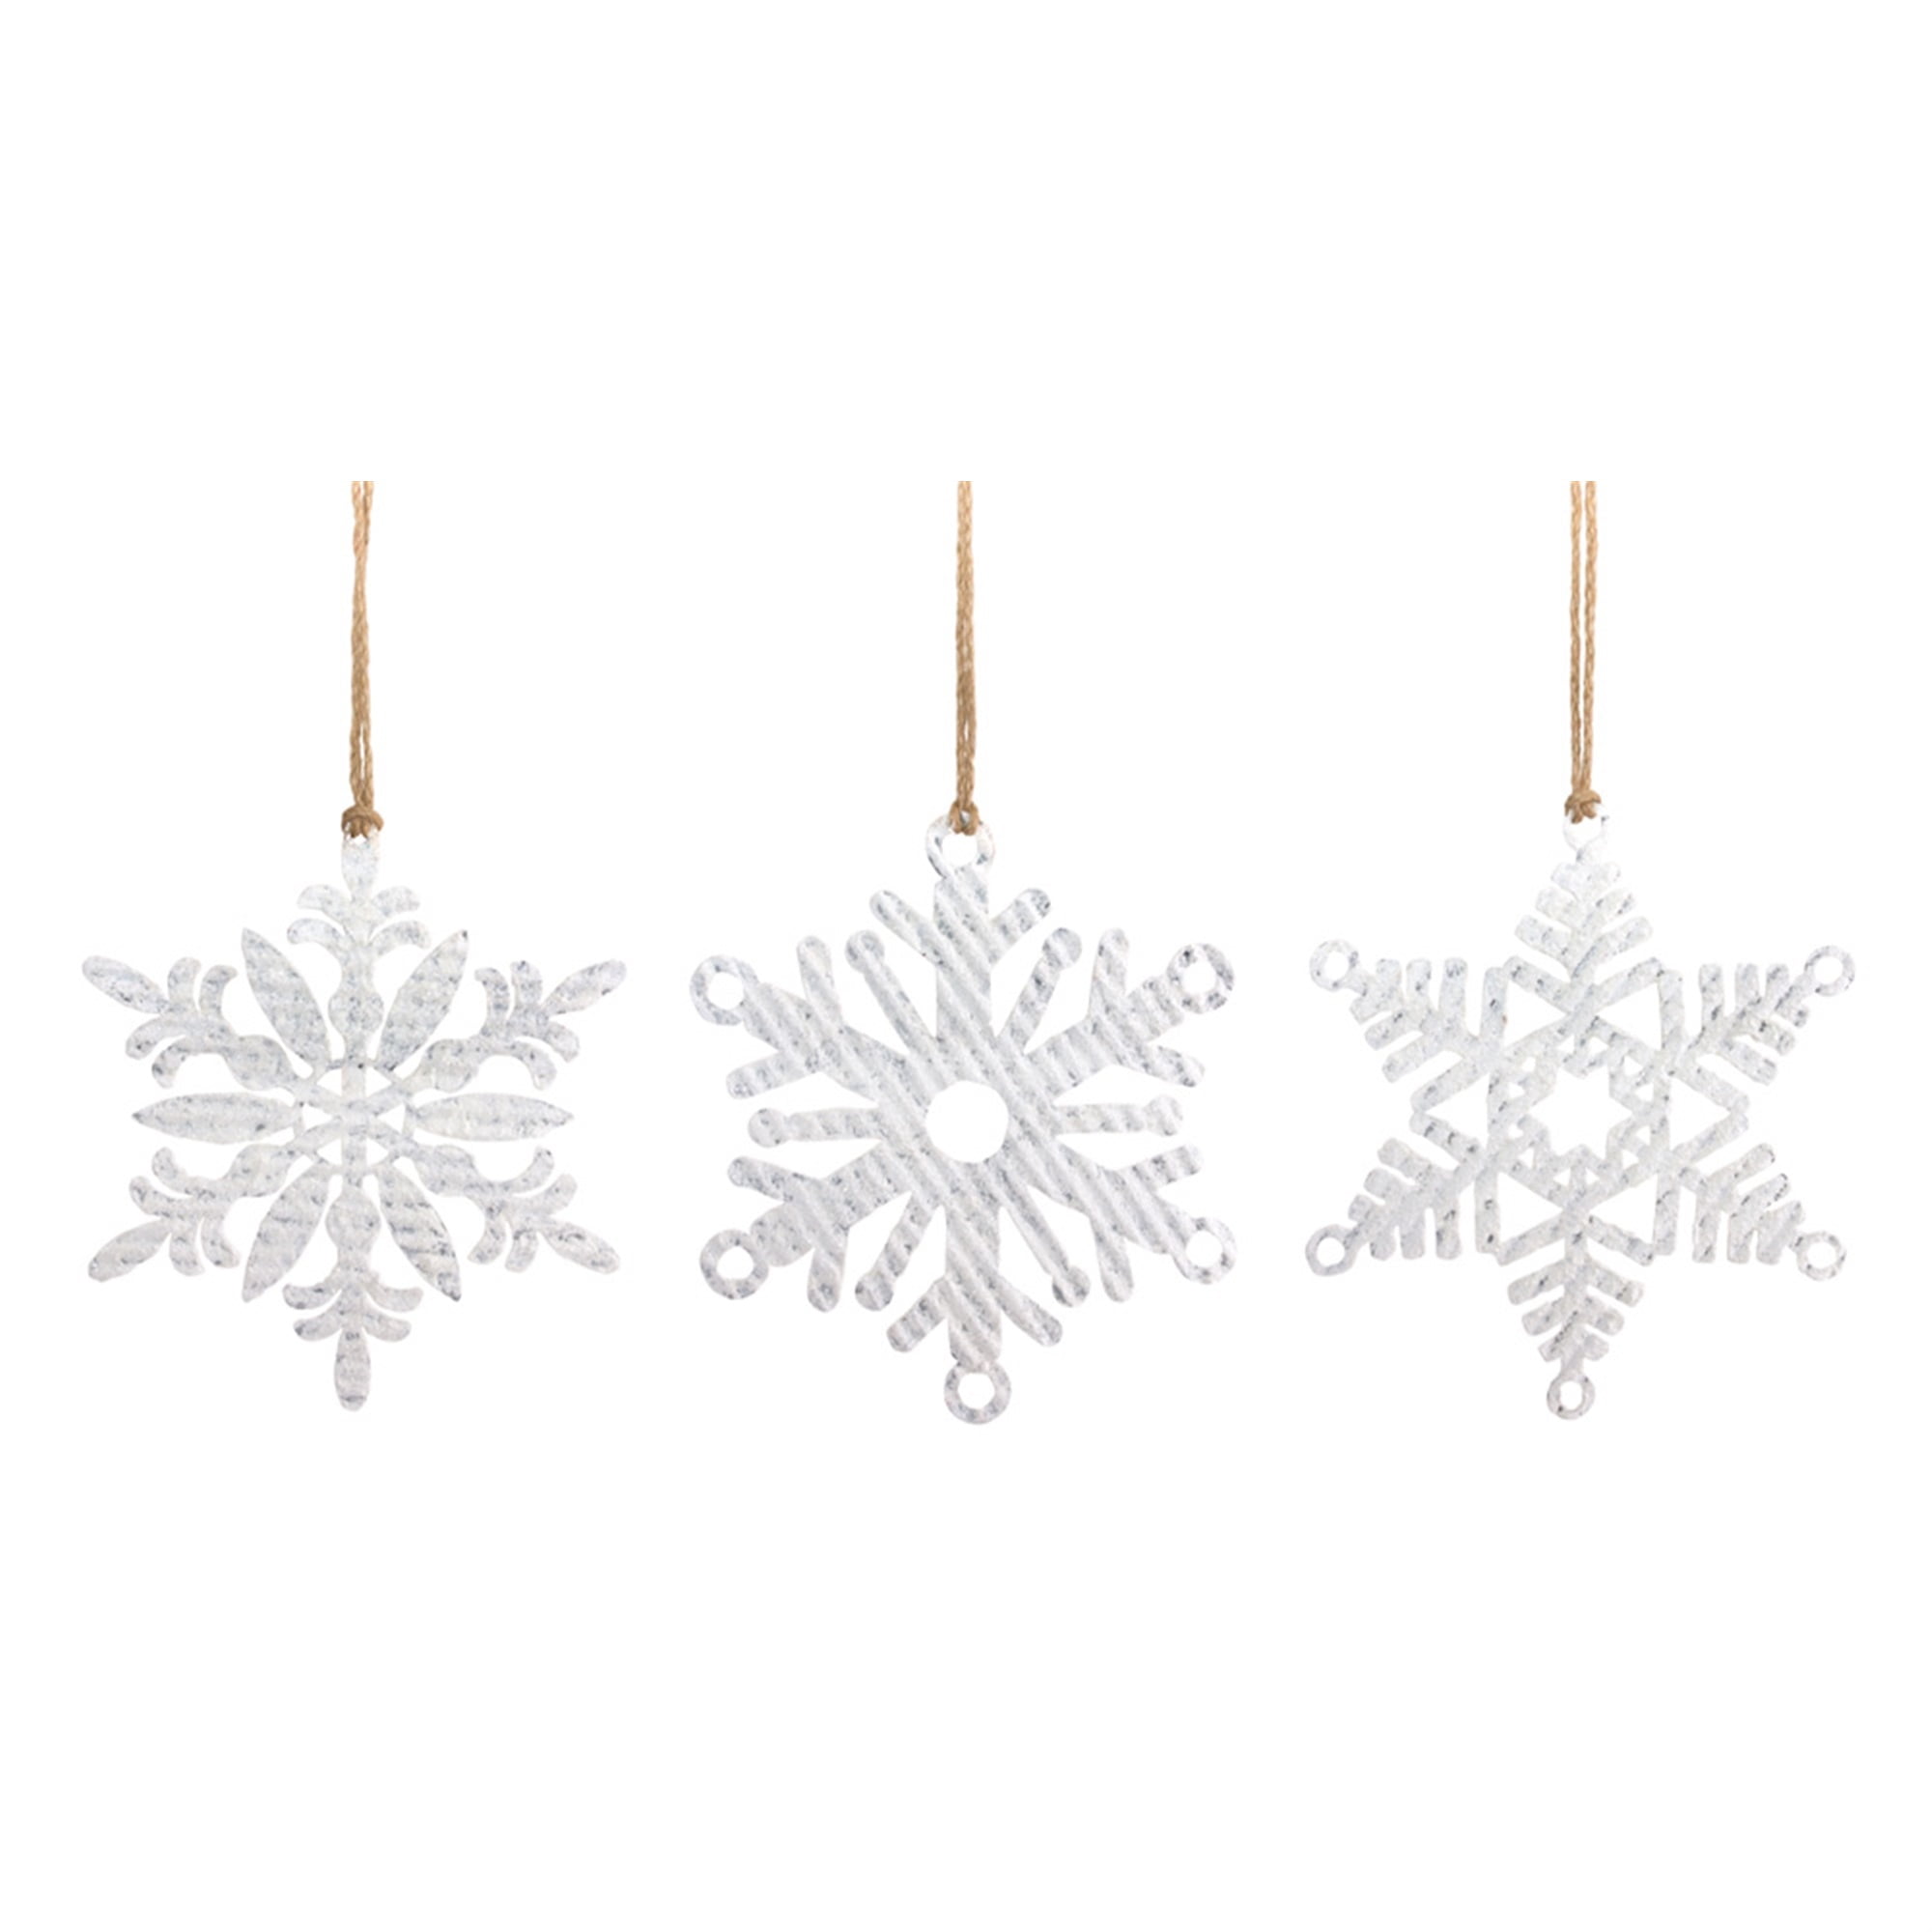 Snowflake Ornament (Set of 12) 10"H Iron